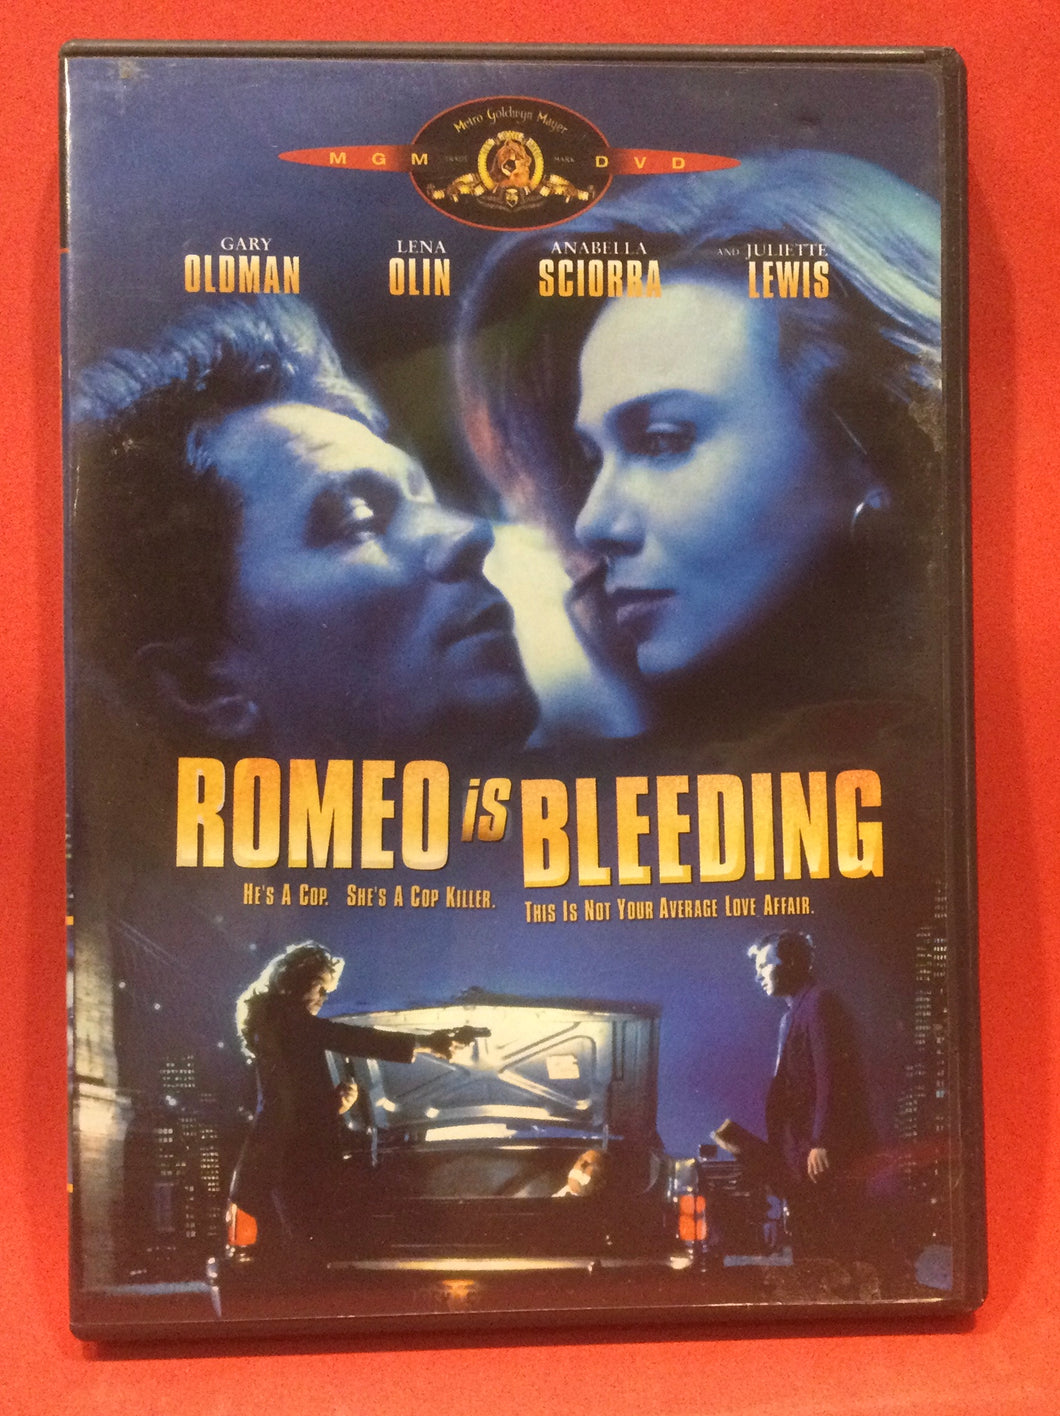 ROMEO IS BLEEDING - DVD (USED)